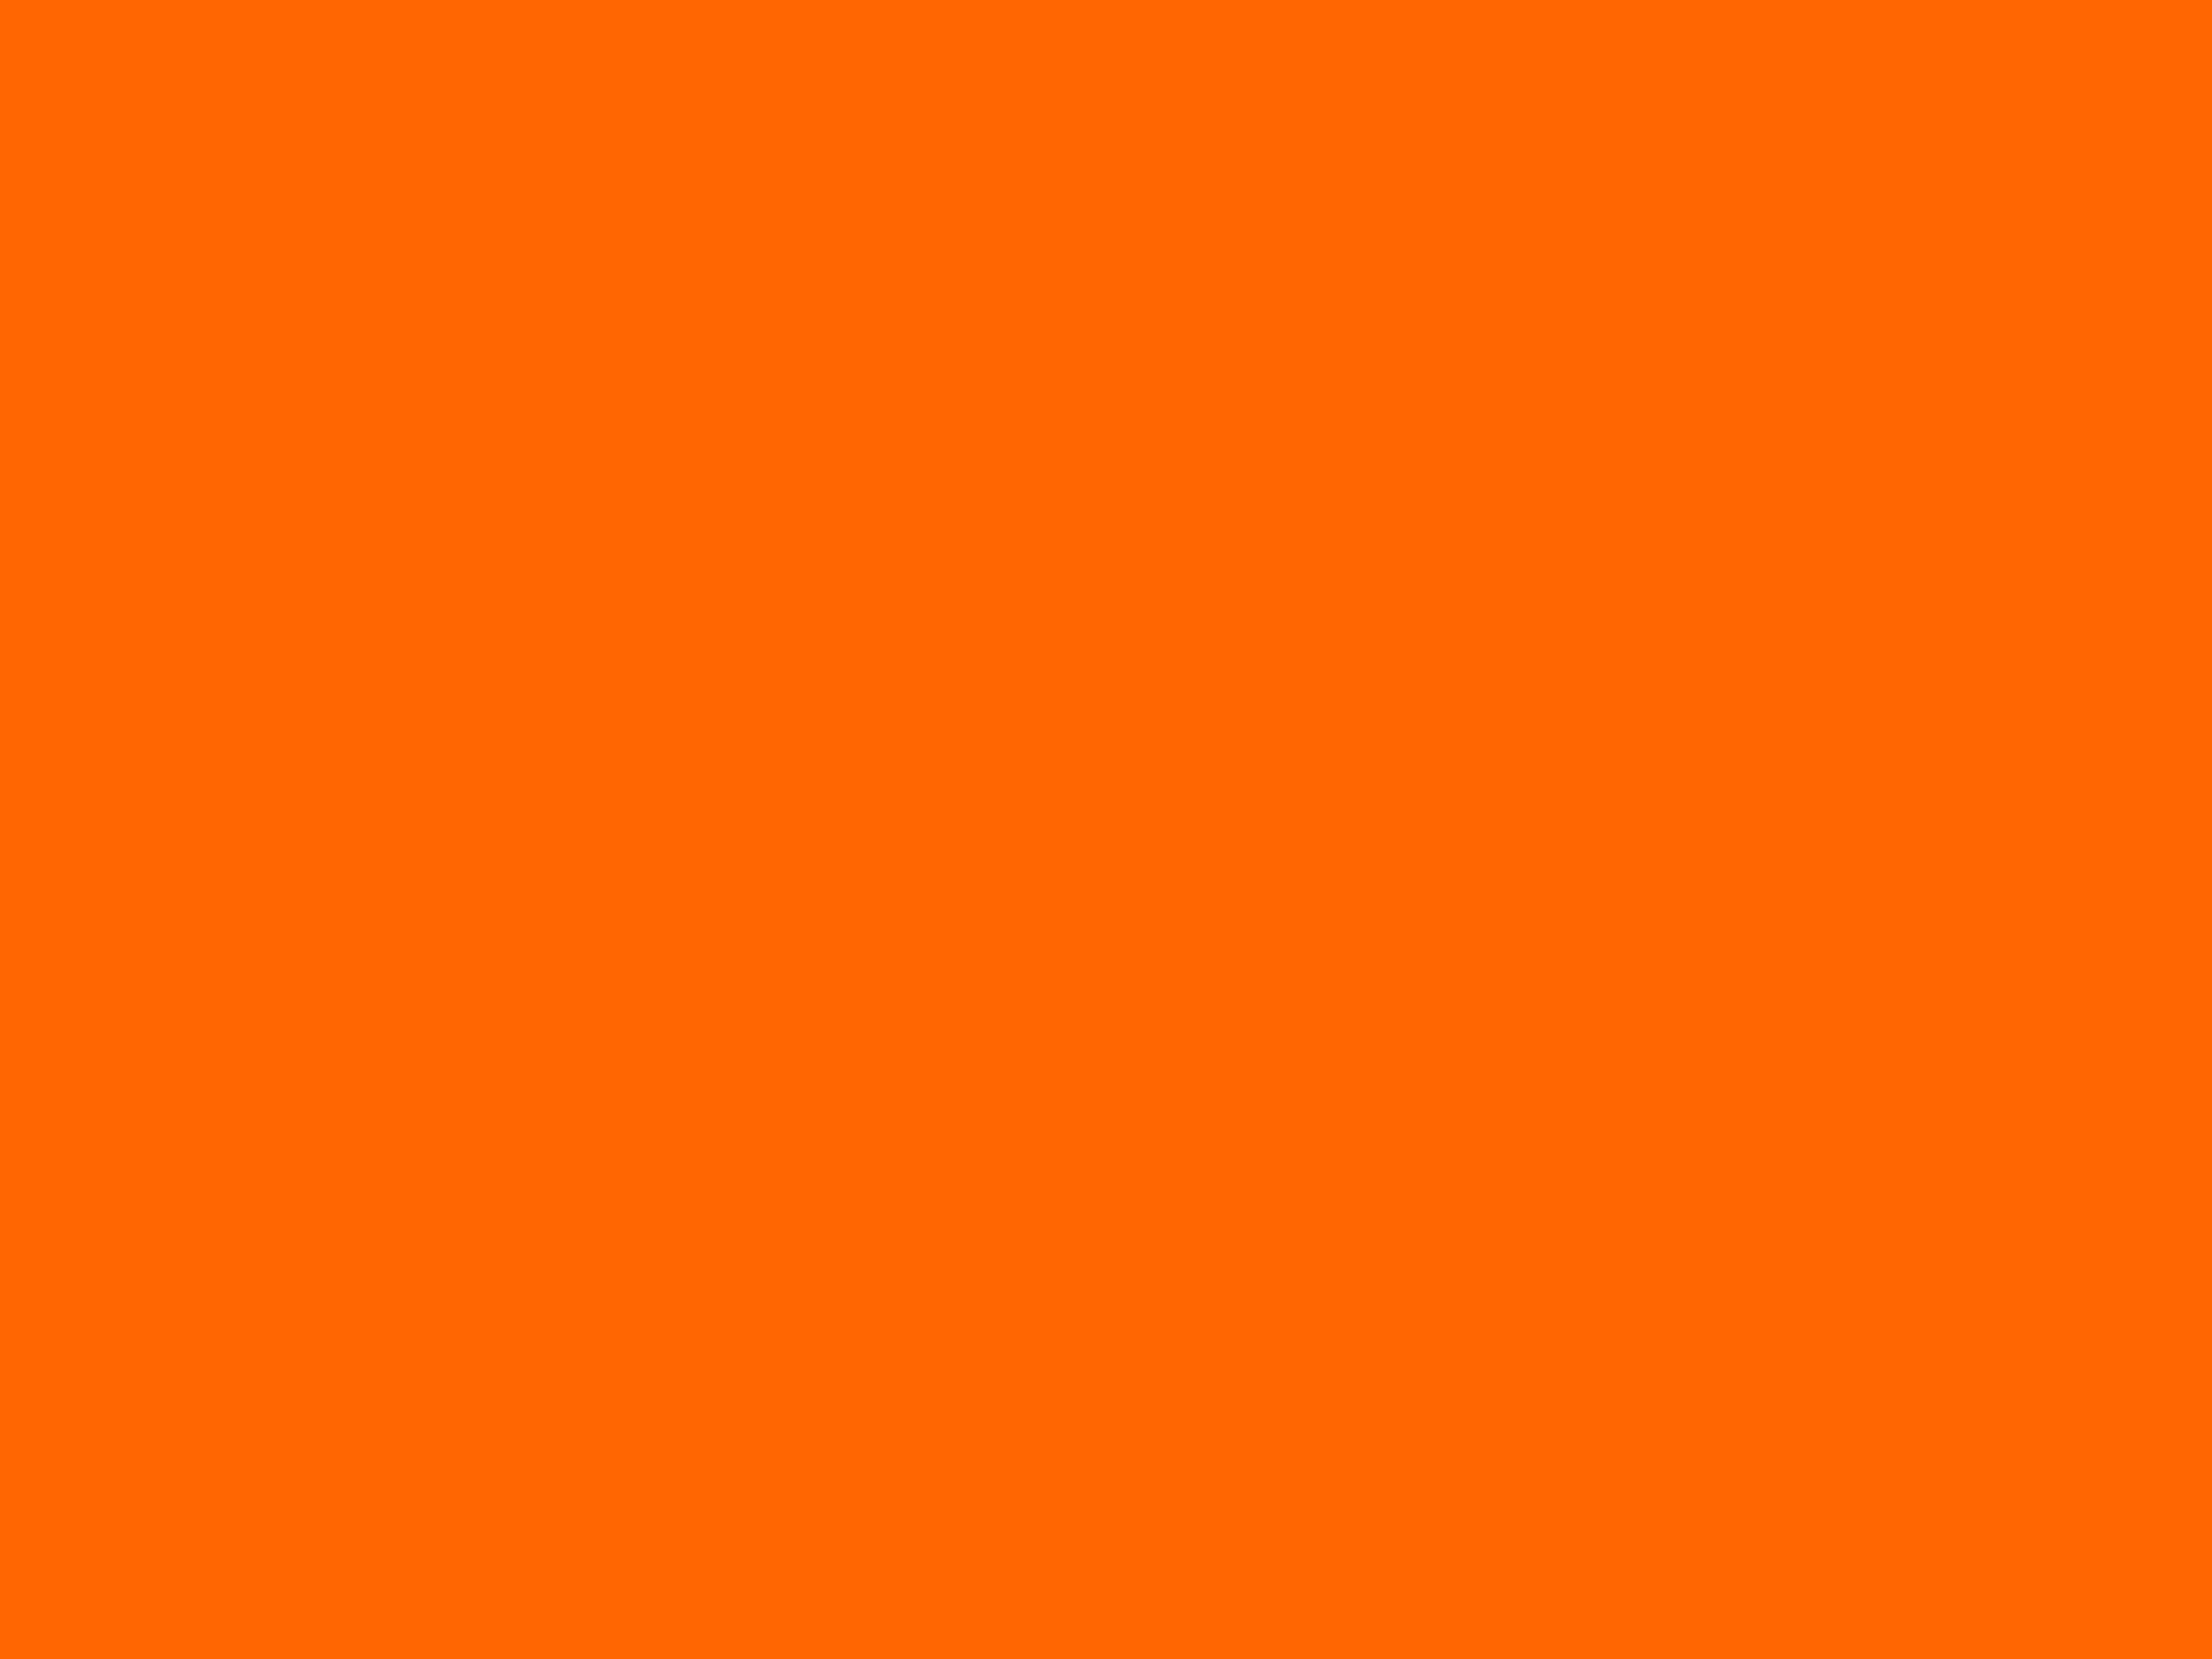 Orange (Farbe) - anregende Hitze